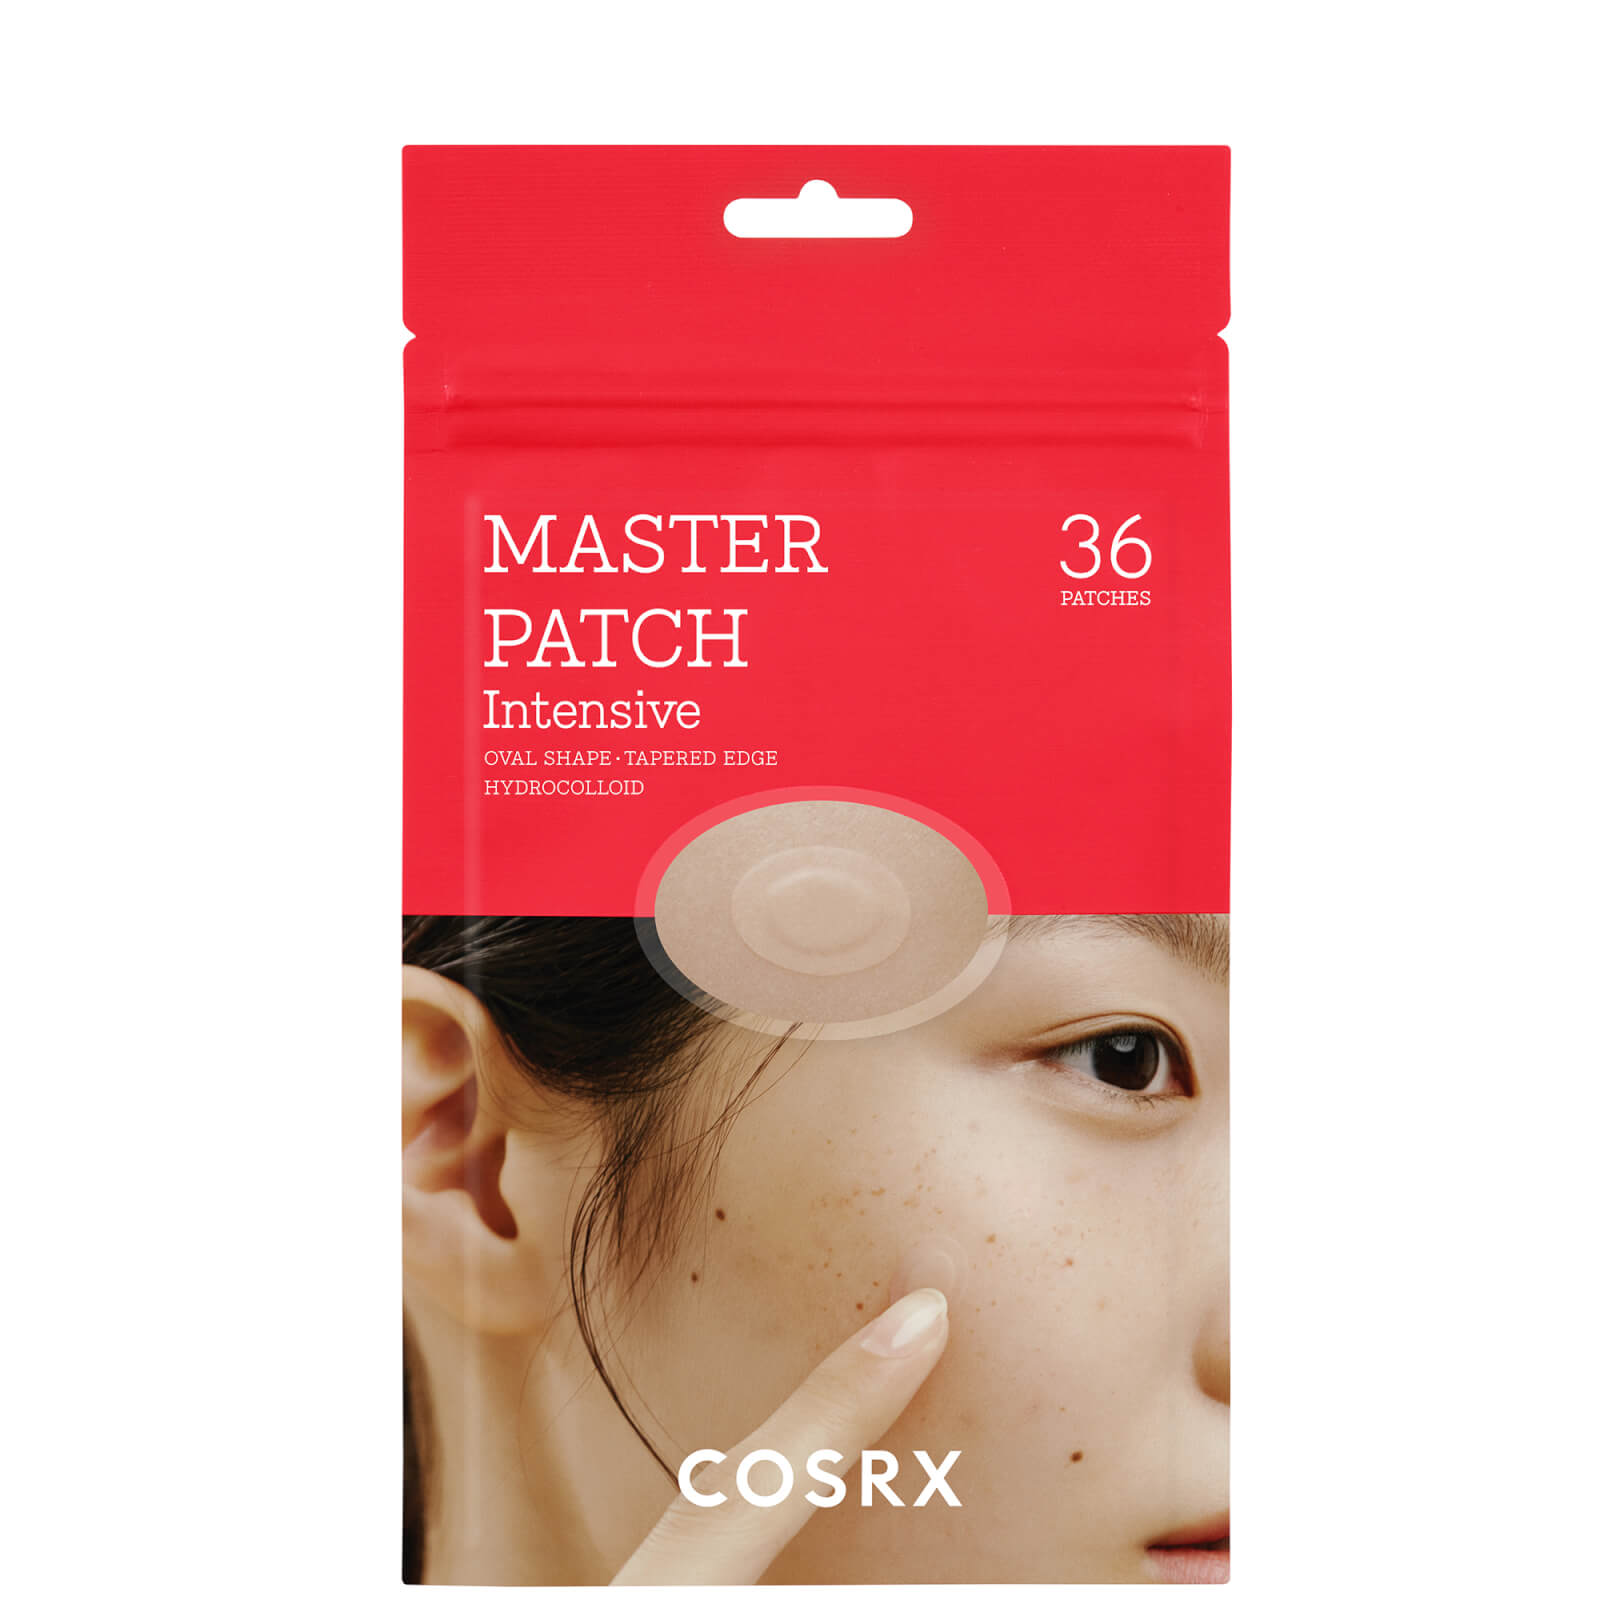 Photos - Facial Mask COSRX Master Patch Intensive  (36 Pack)